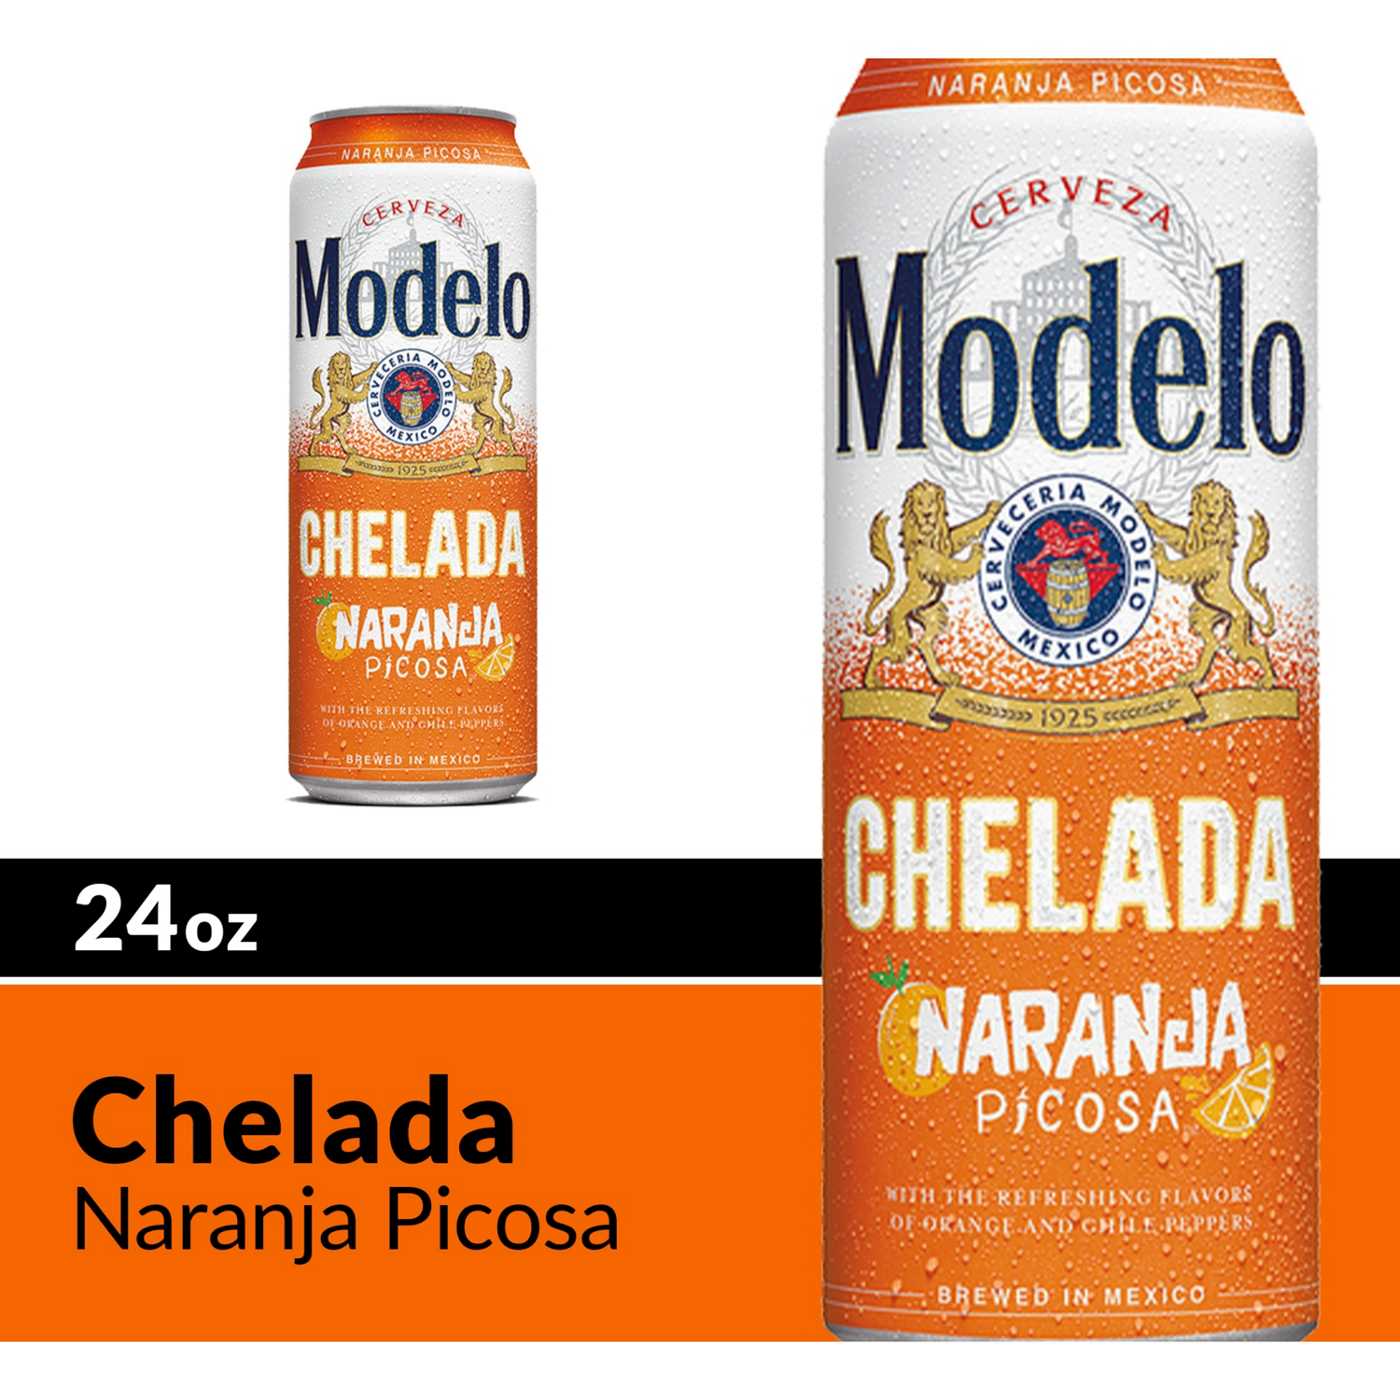 Modelo Chelada Naranja Picosa Mexican Import Flavored Beer 24 oz Can; image 8 of 9